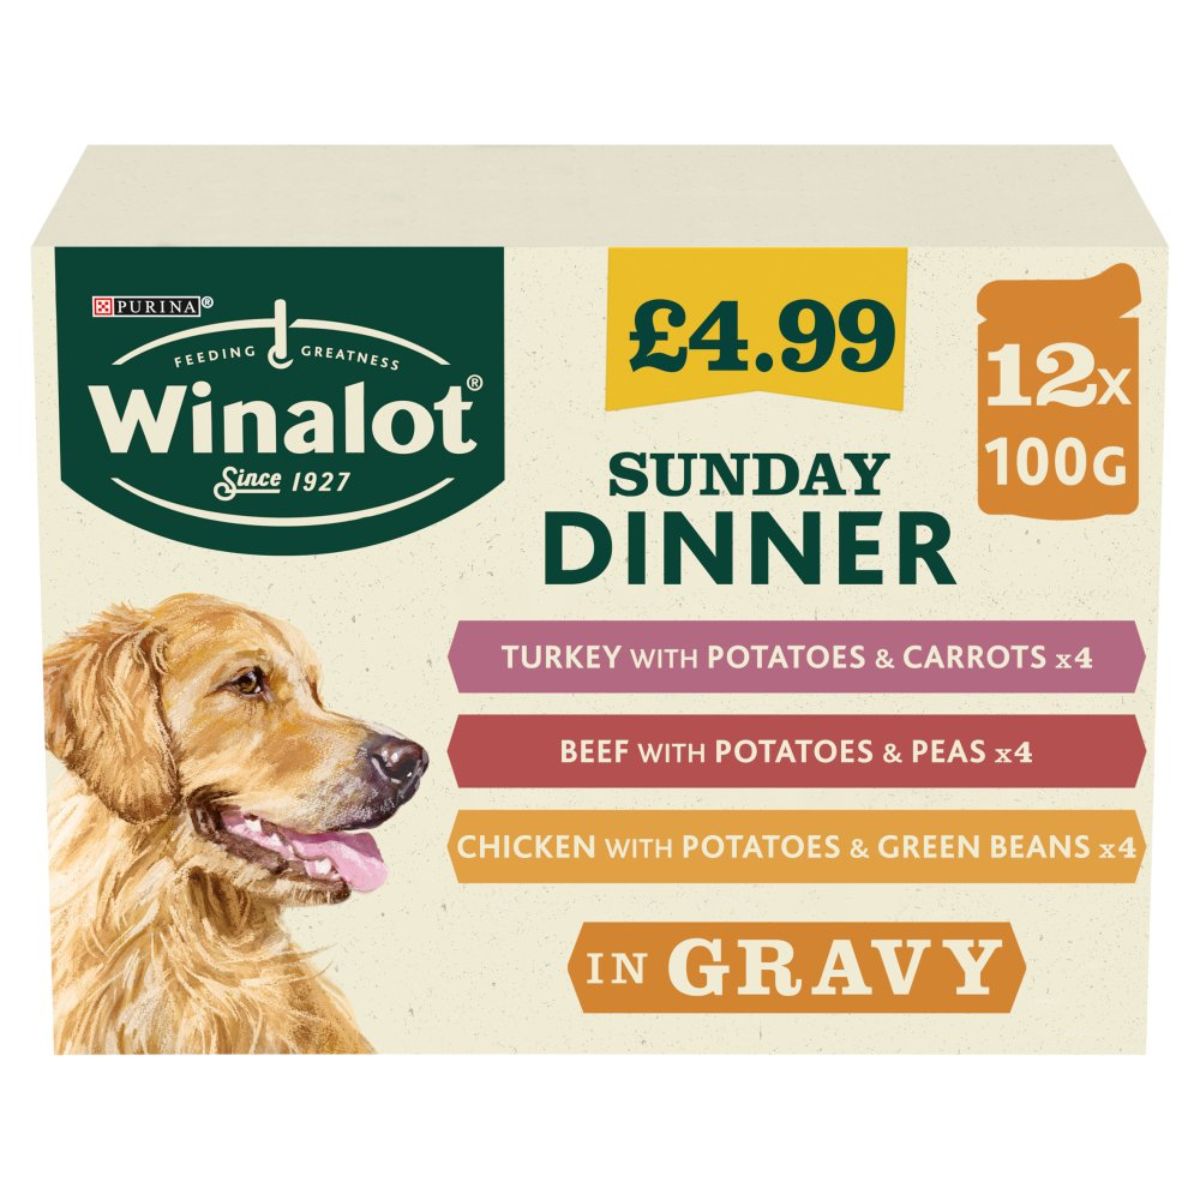 Winalot - Sunday Dinner in Gravy - 1200g dog food.